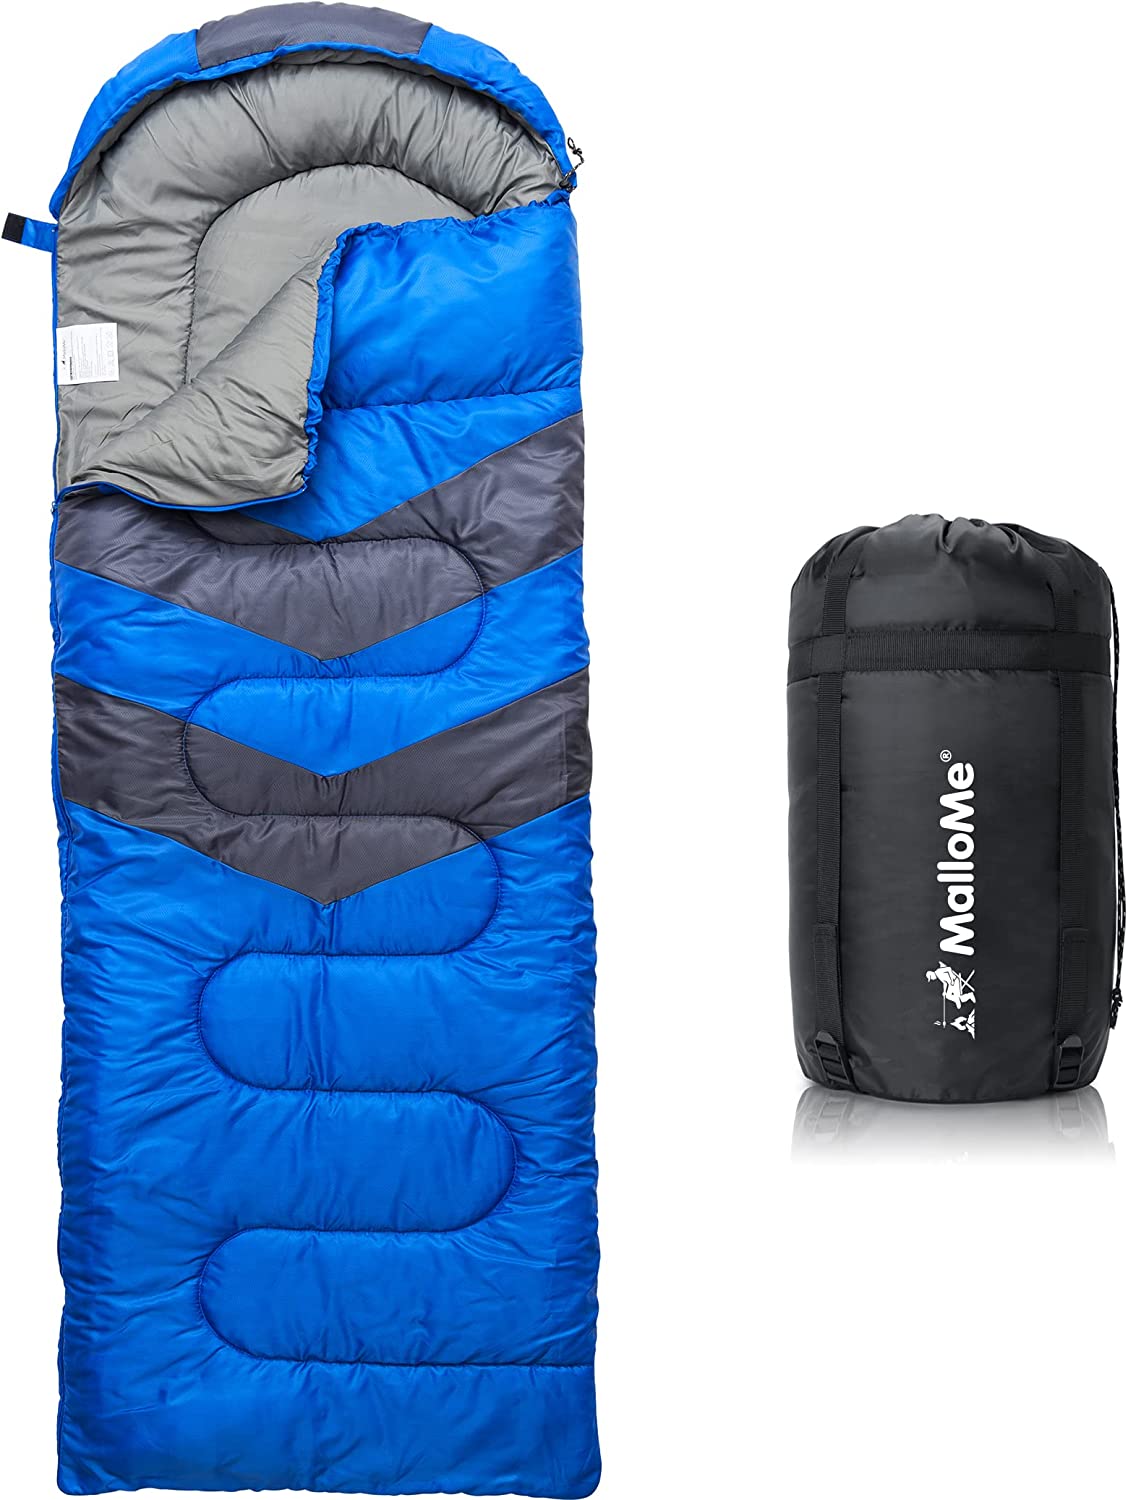 MalloMe 3-Season Lightweight Sleeping Bag For Adults